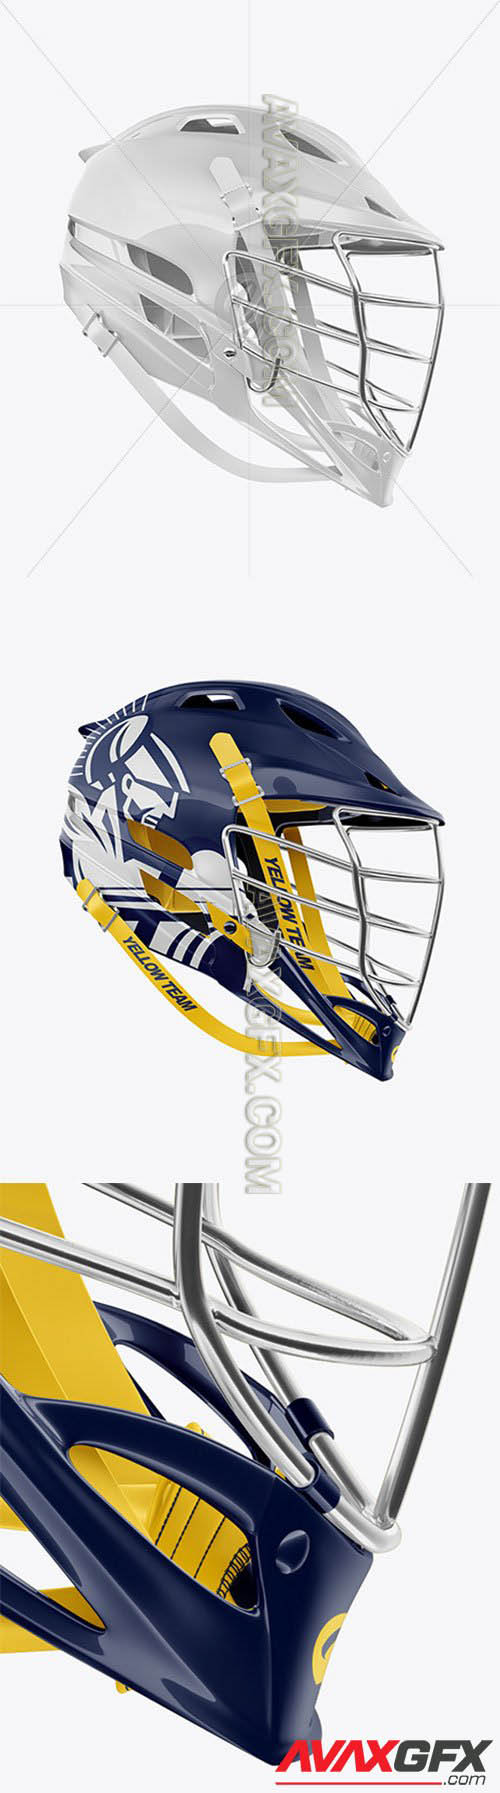 Lacrosse Helmet Mockup 61276